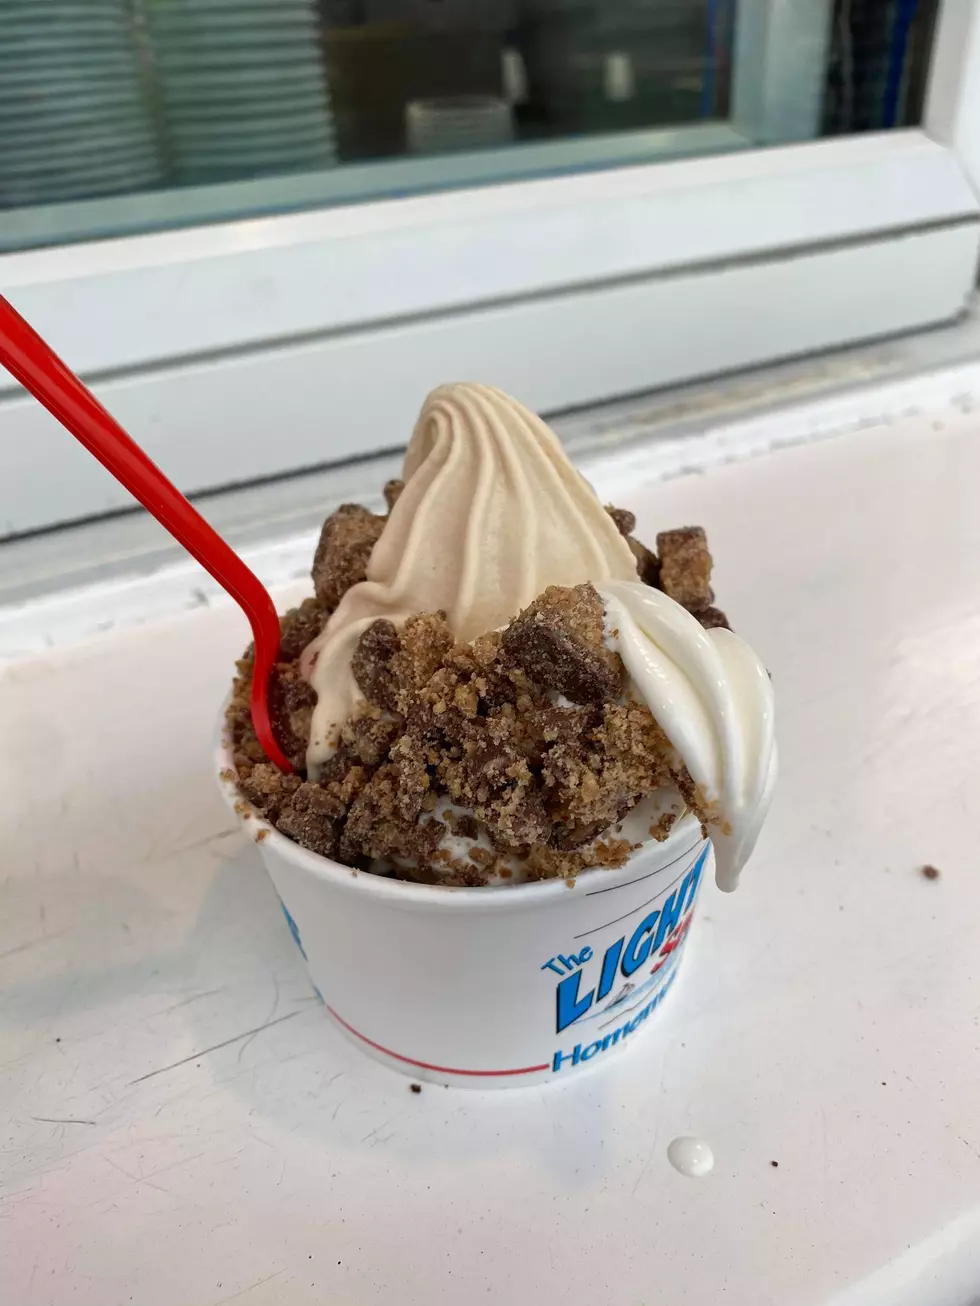 Indulge In Strollo’s In Point Pleasant, NJ For The Best Ice Cream & Italian Ice